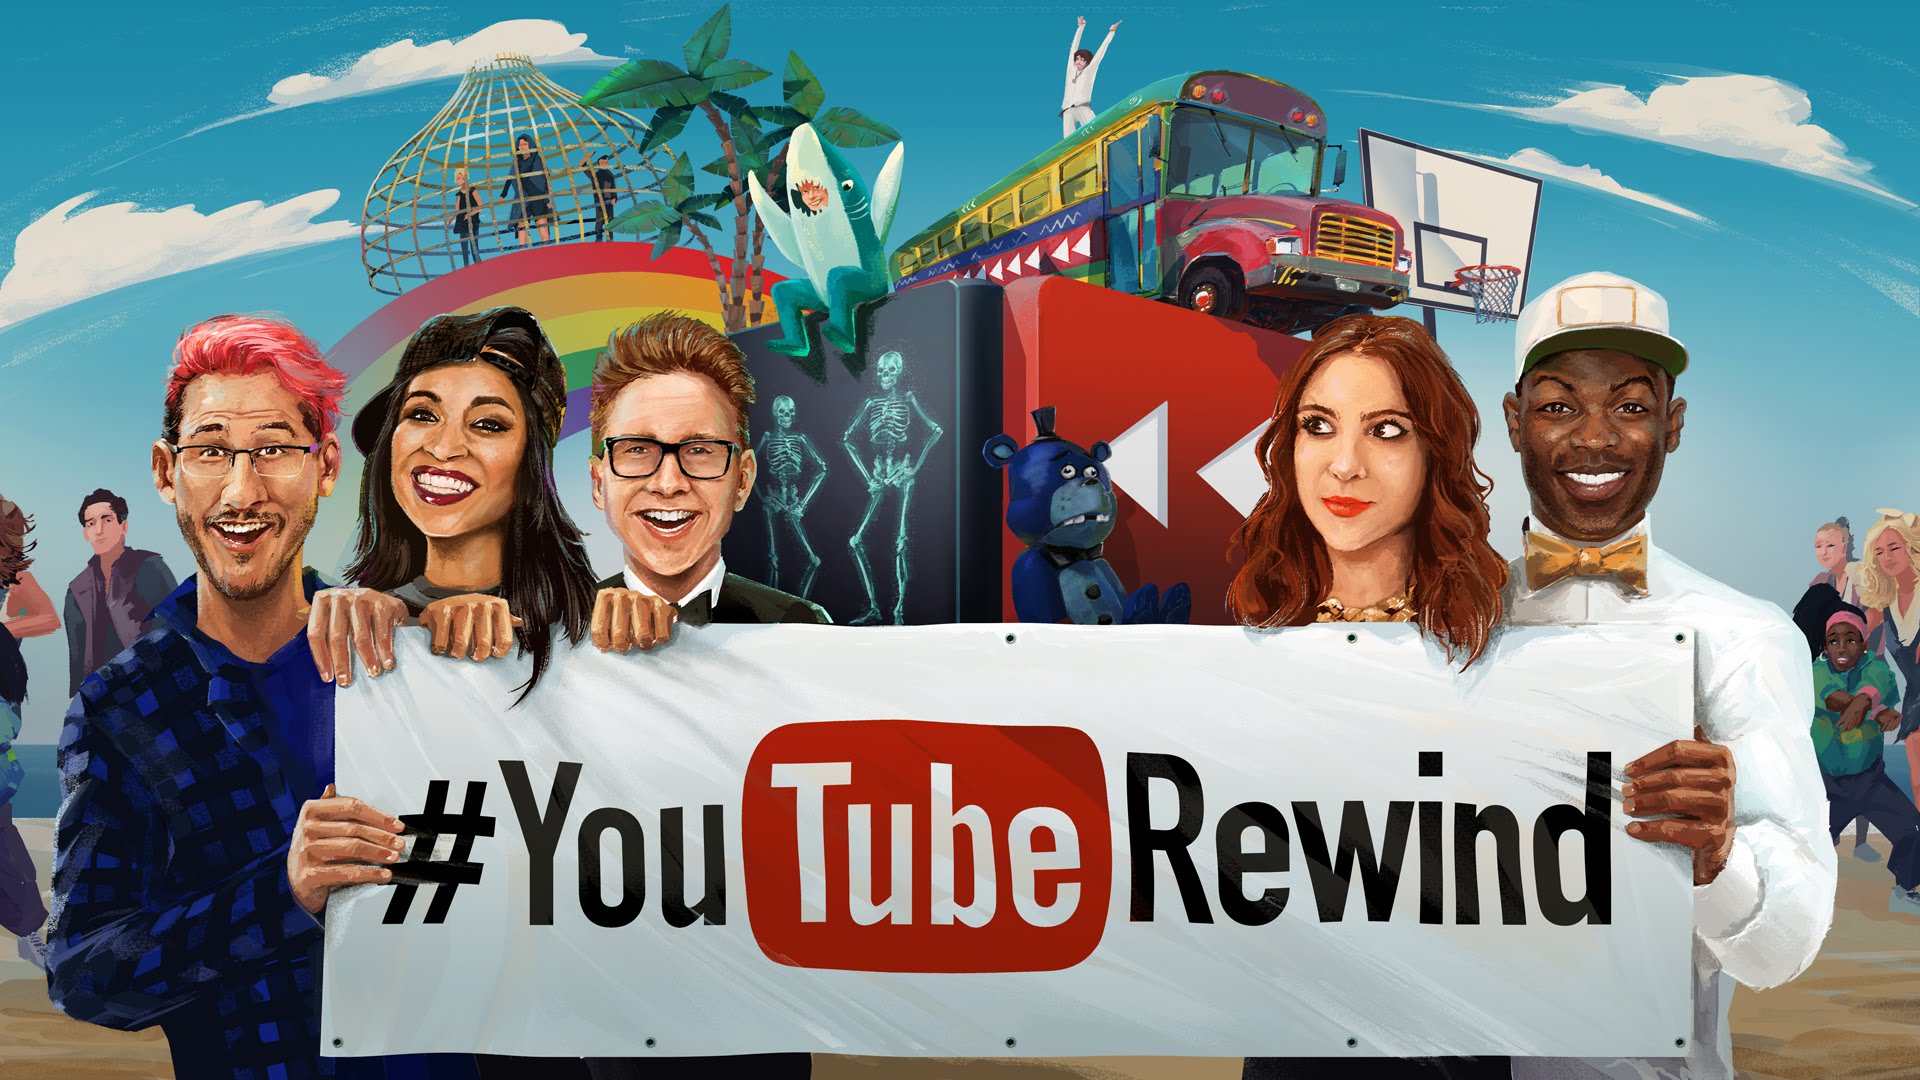 YouTube Rewind 2016